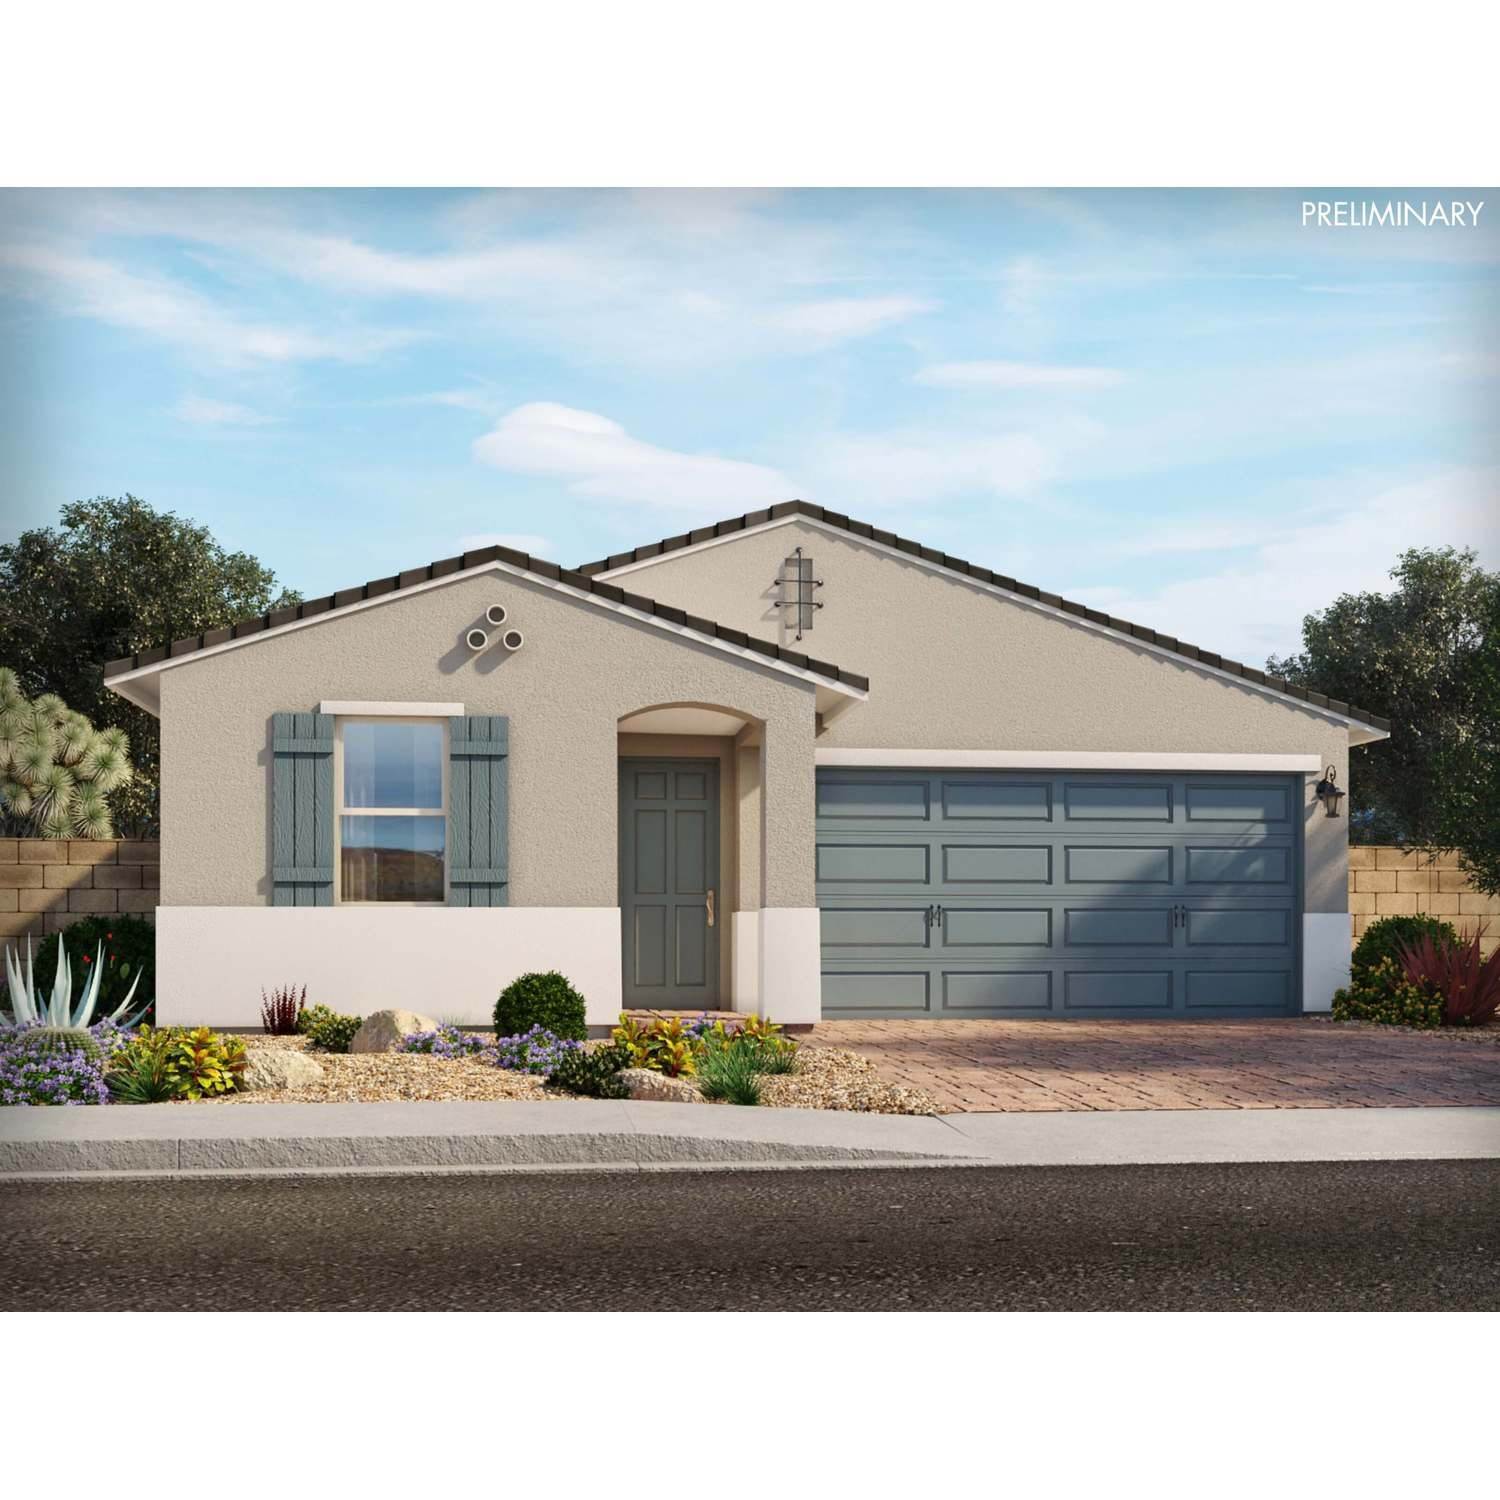 27. Bella Vista Farms - Estate Series xây dựng tại 3563 E Jasmine Way, San Tan Valley, AZ 85143